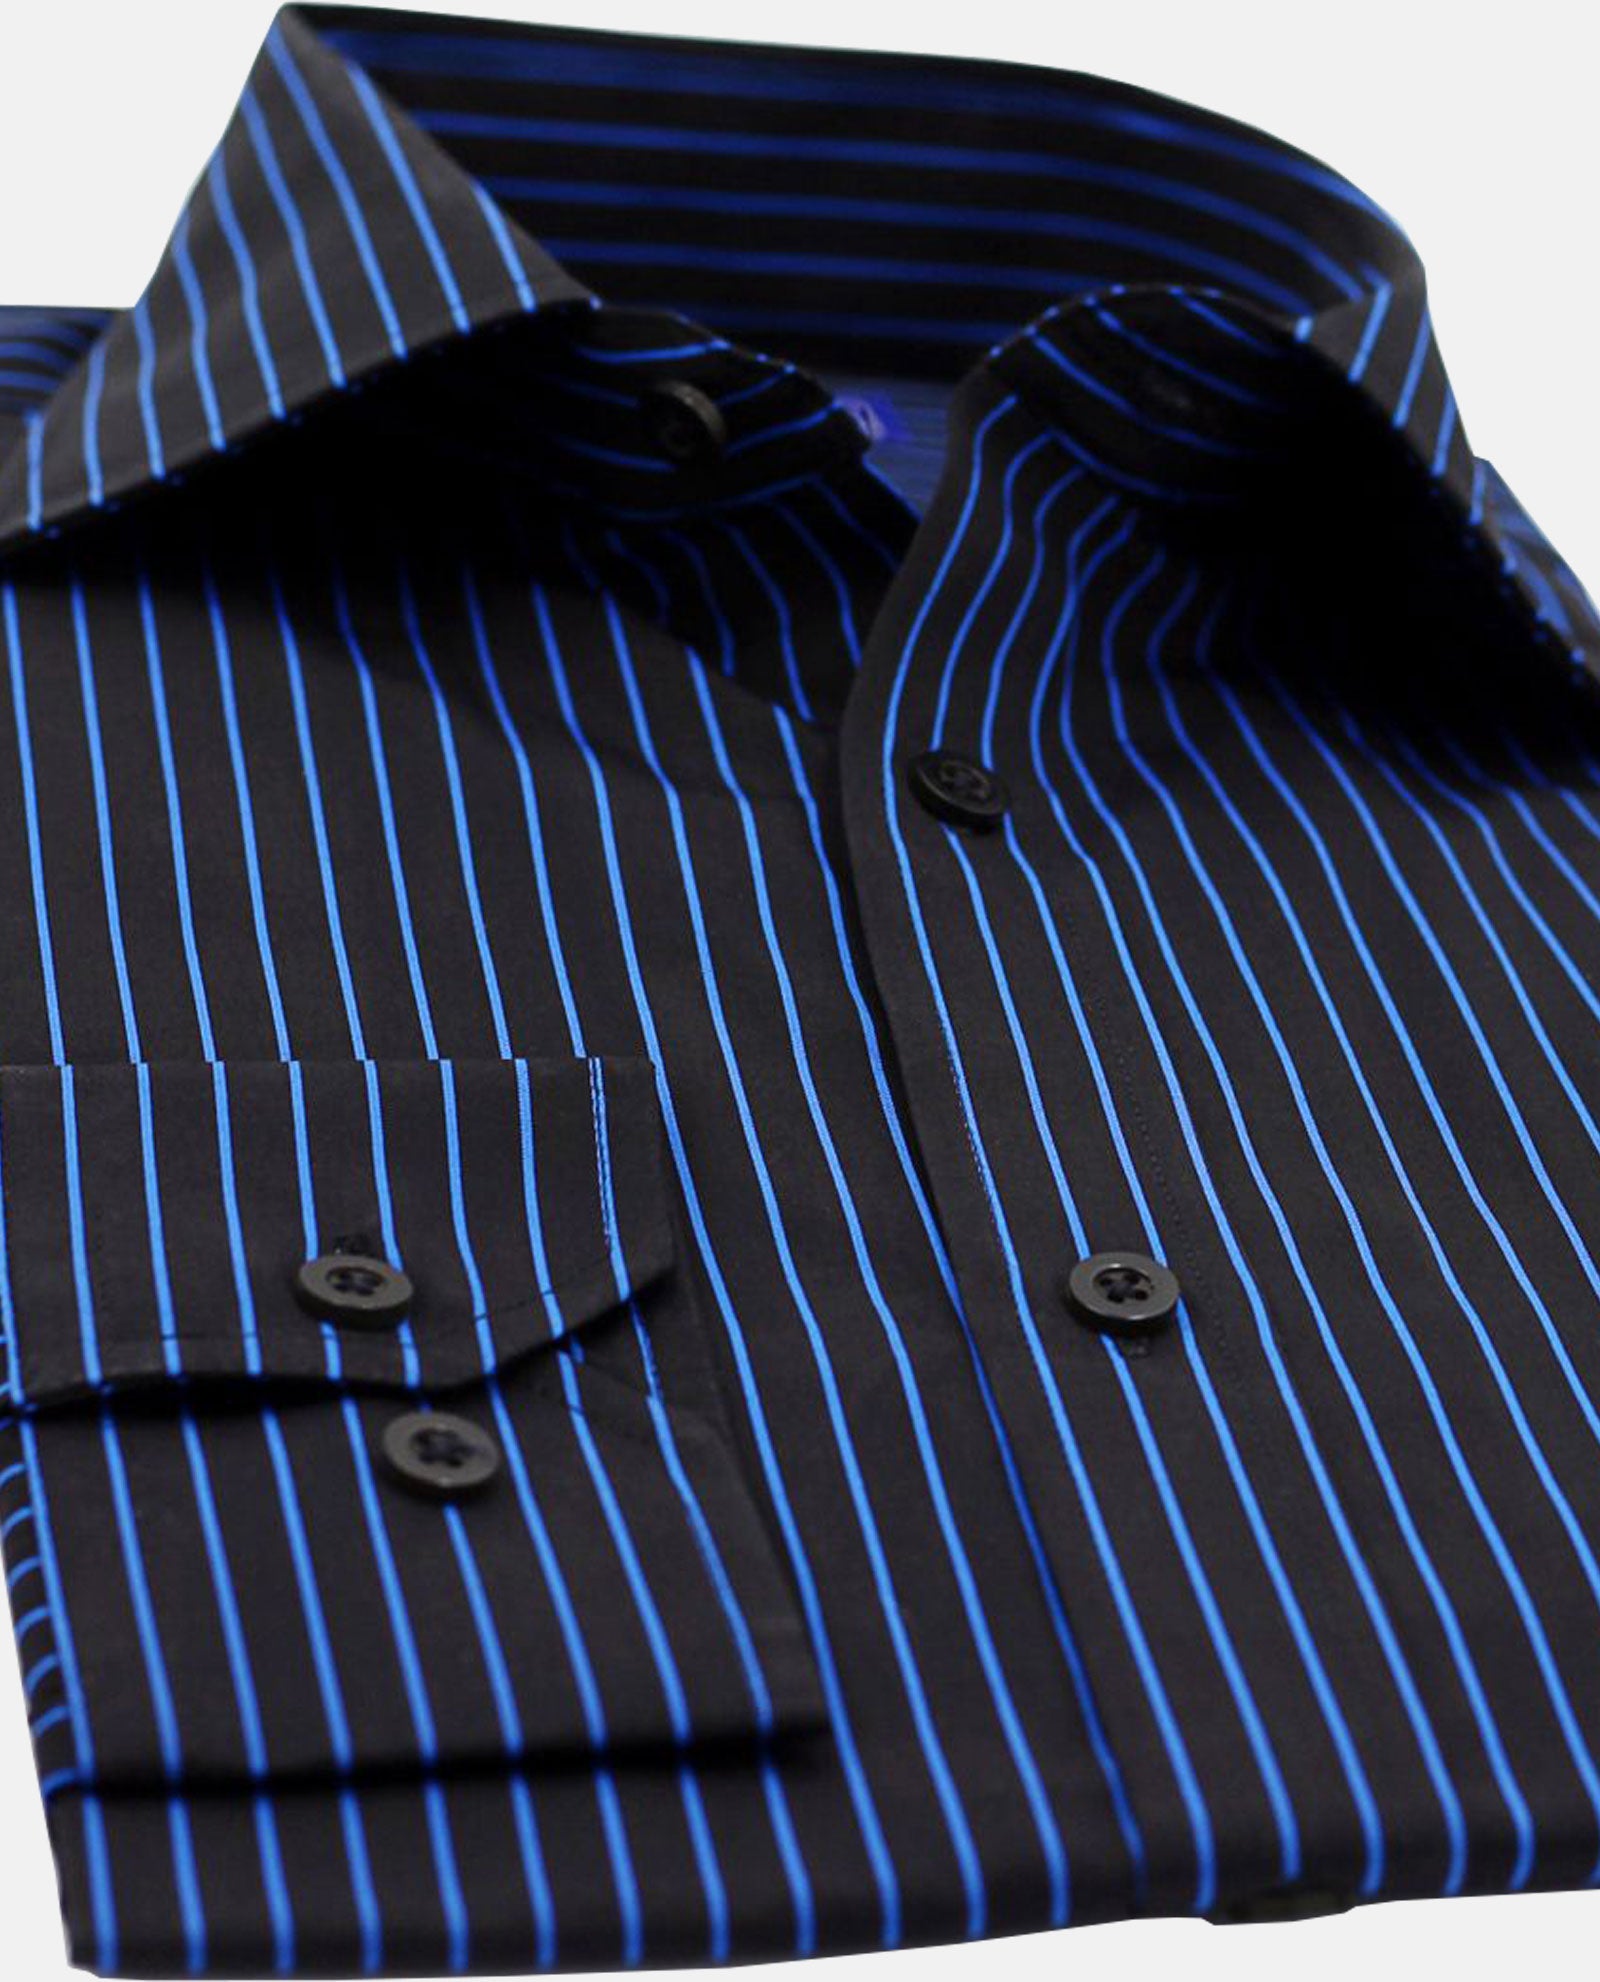 Blue Pin Stripe on Black Shirt